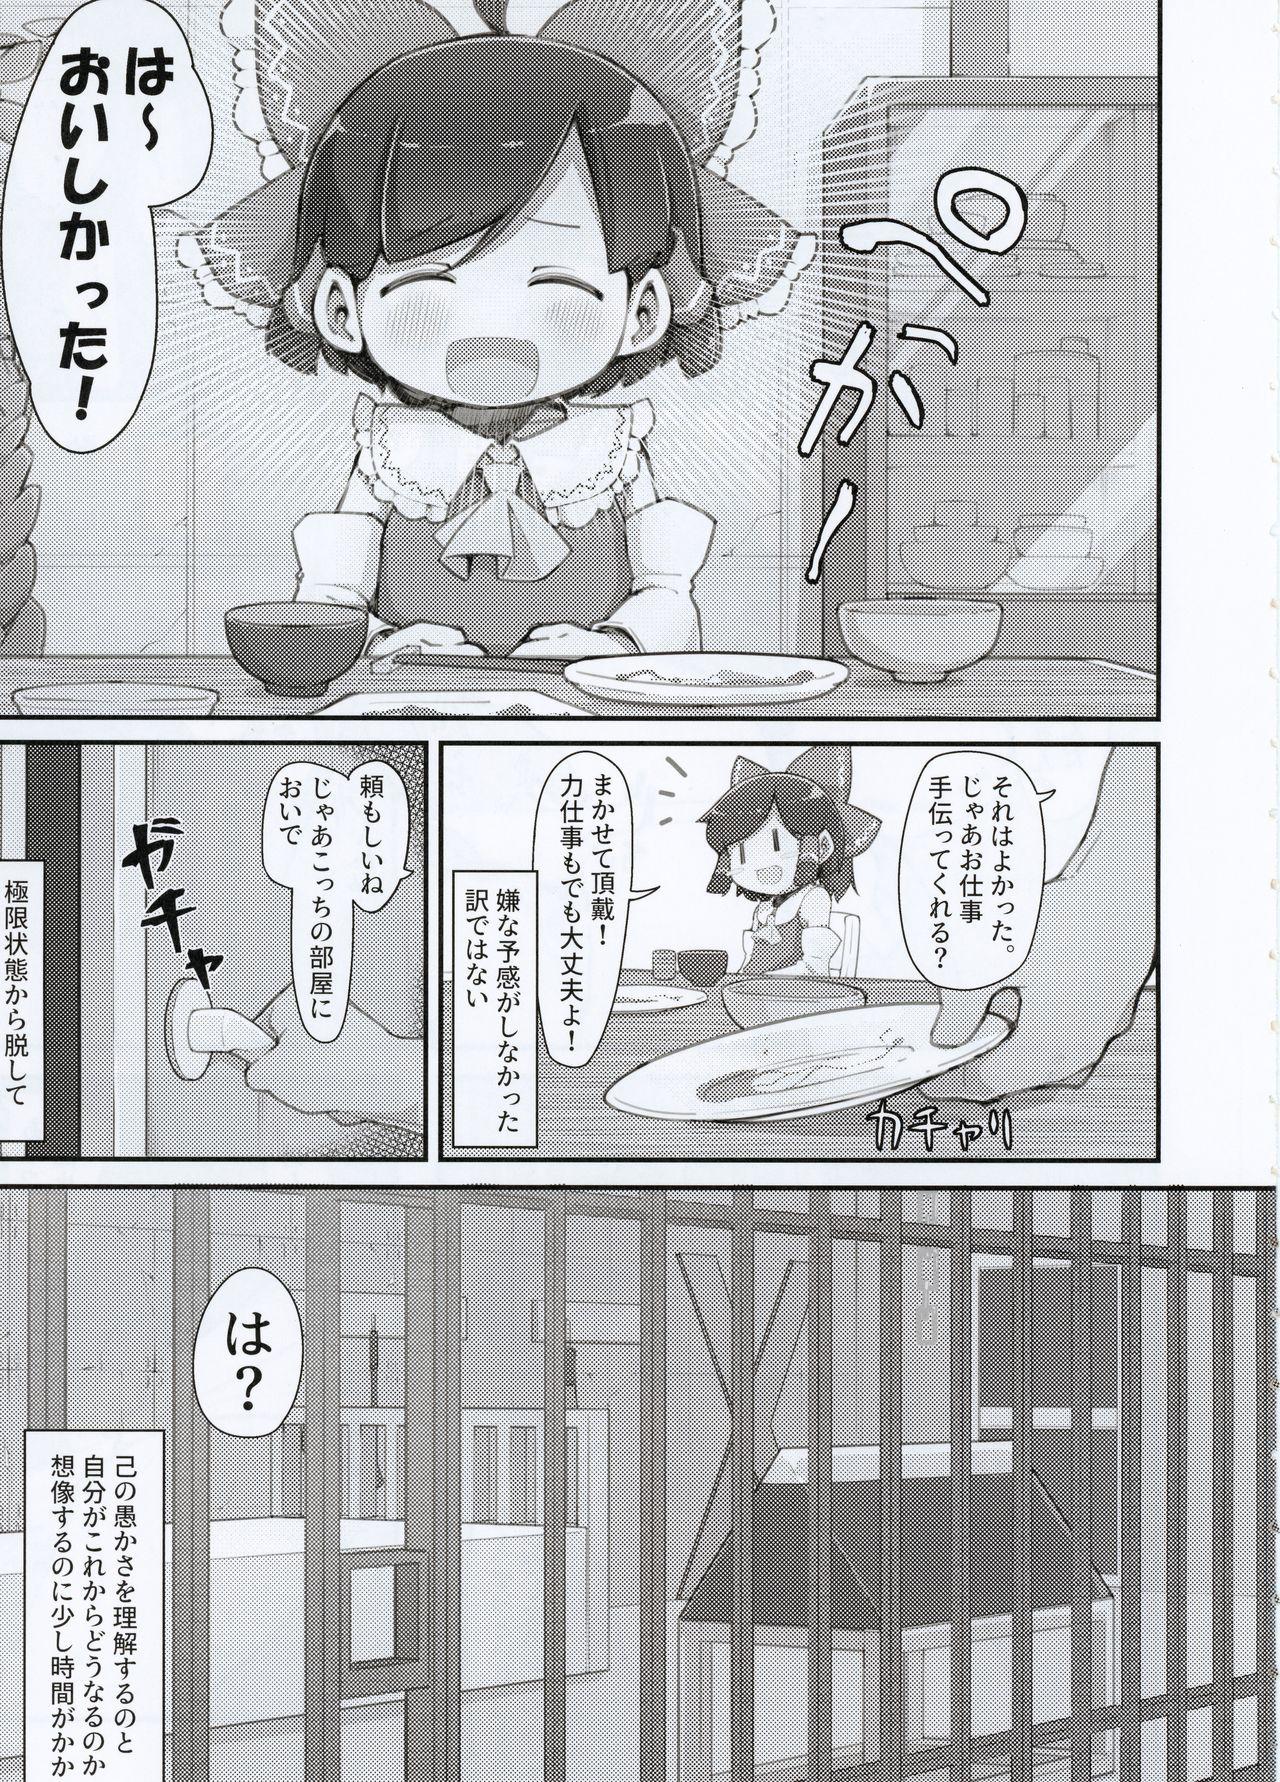 From Hakurei no Miko Gaikai Ochi Ura Rei Rei ● ● Satsuei - Touhou project Chaturbate - Page 4